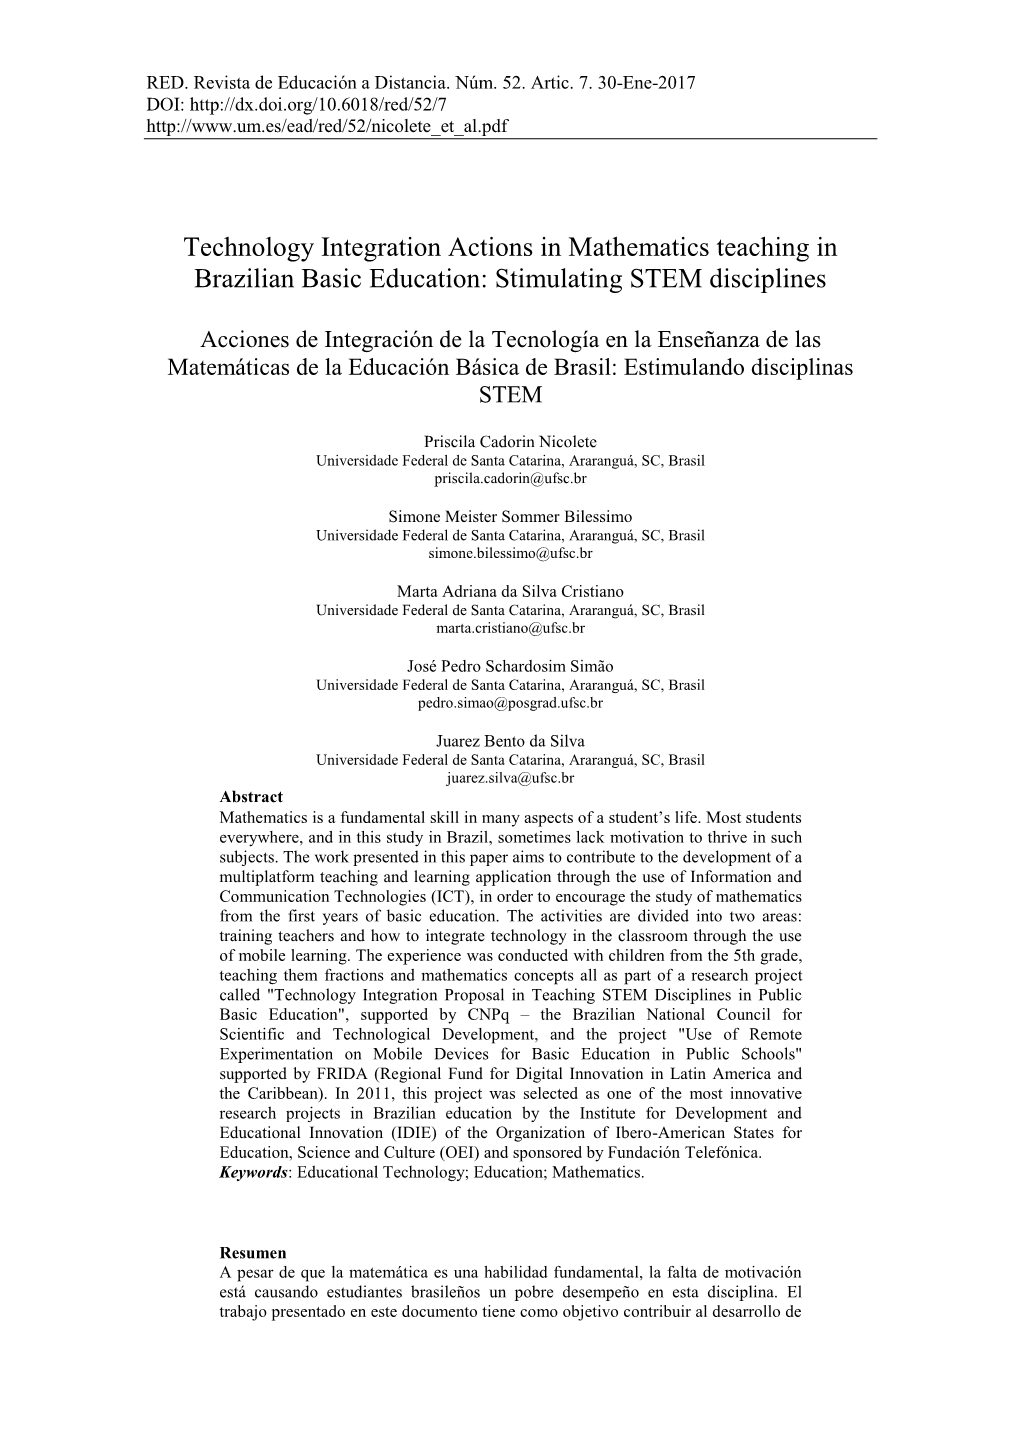 Technology Integration Actions in Mathematics Teaching in Brazilian Basic Education: Stimulating STEM Disciplines